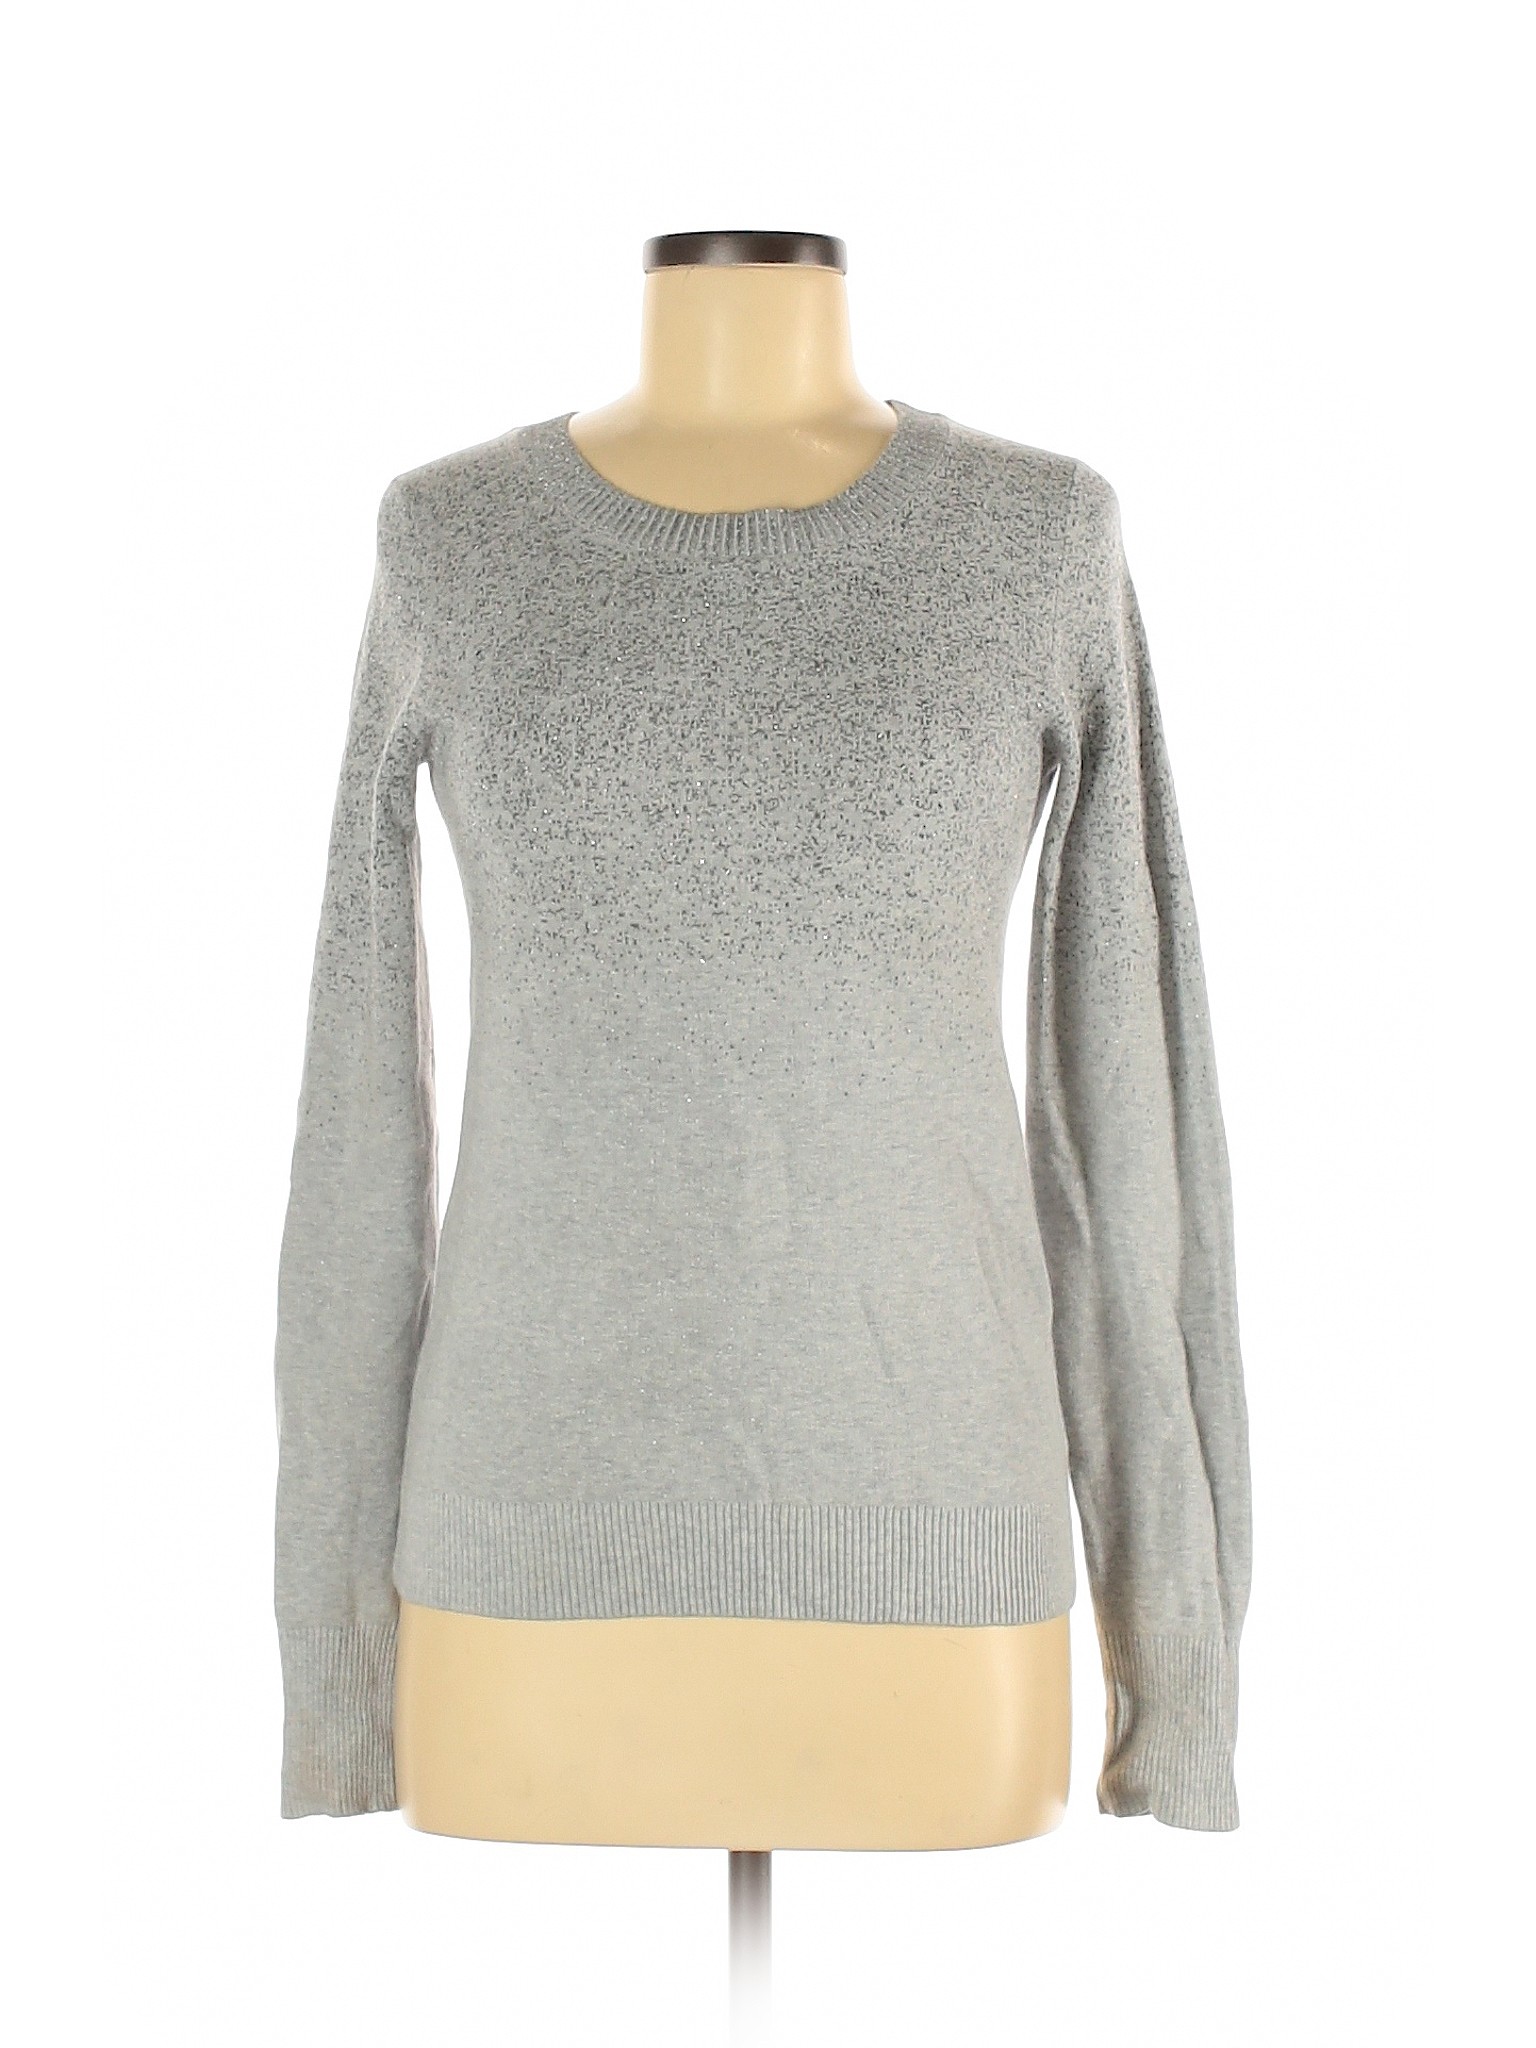 Express Women Gray Pullover Sweater M | eBay